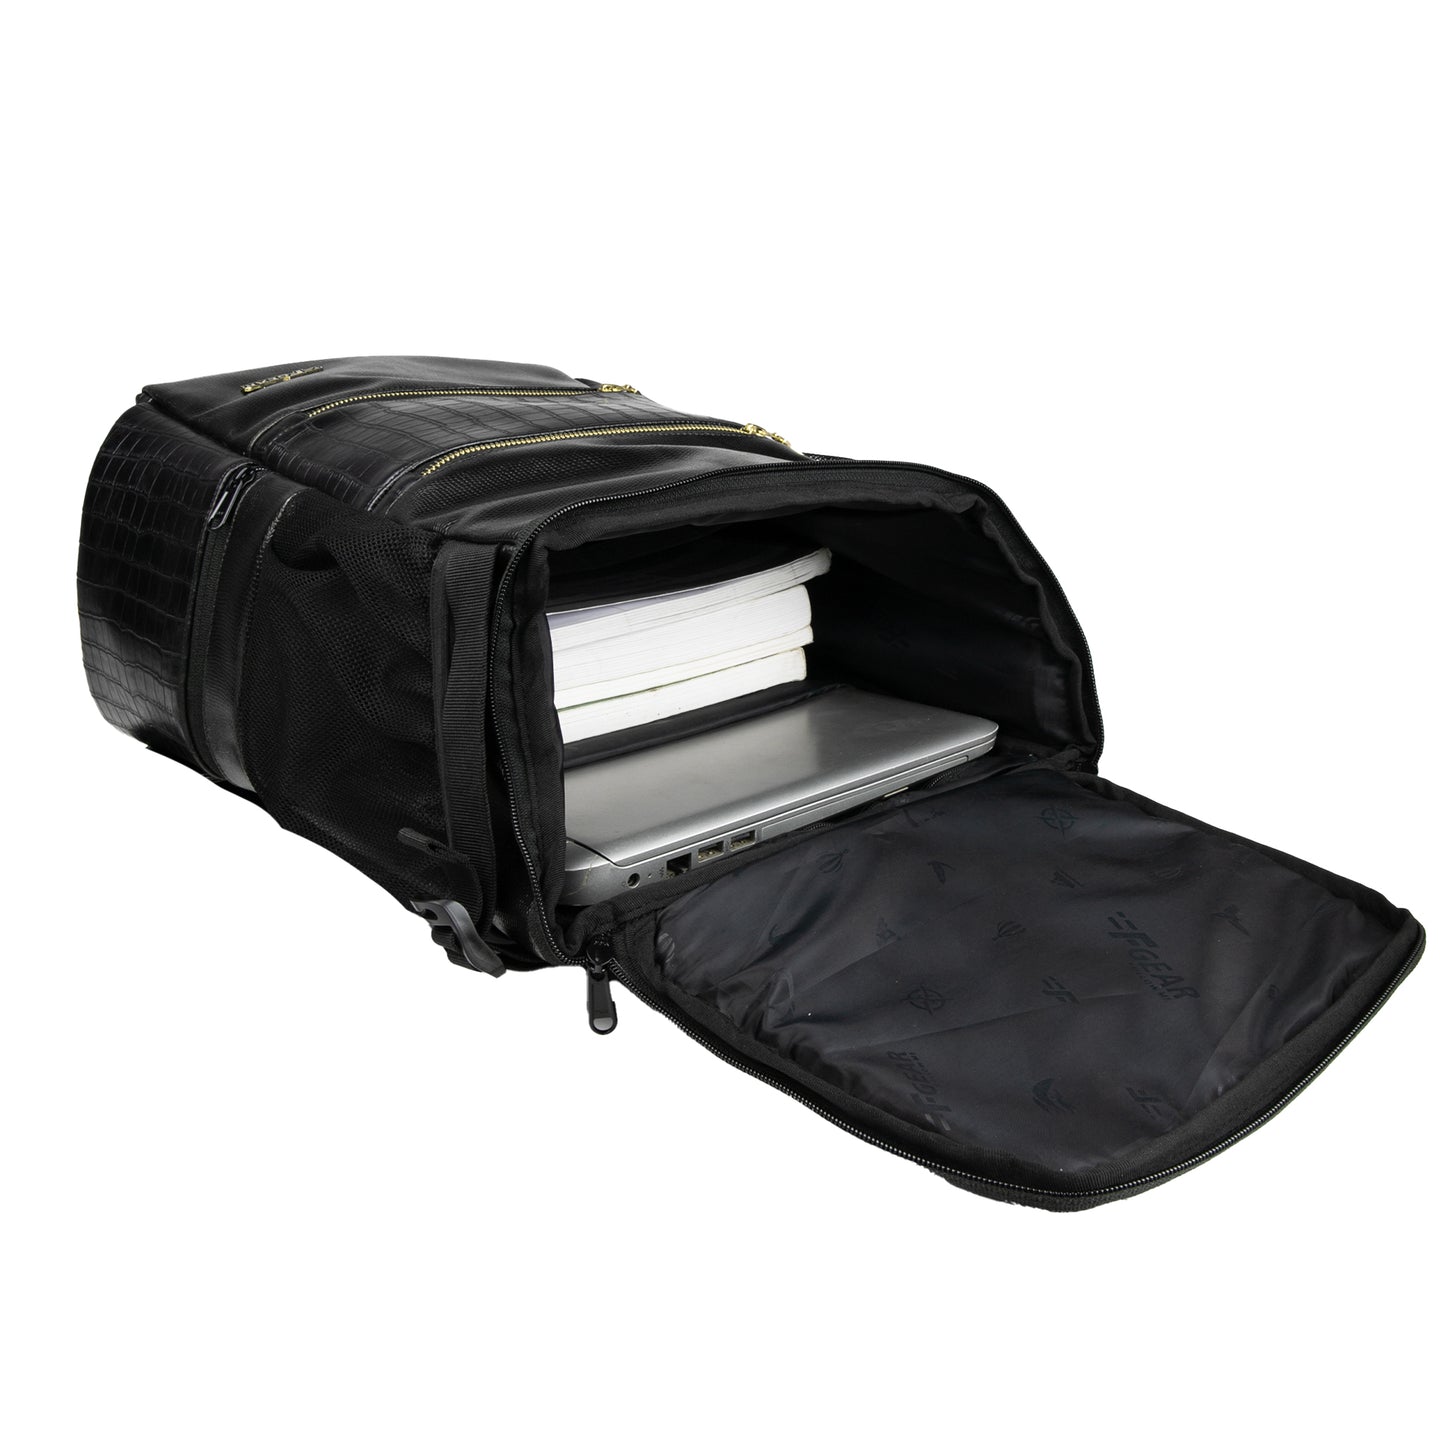 Tyndall 25L Black Vegan Leather Laptop Backpack